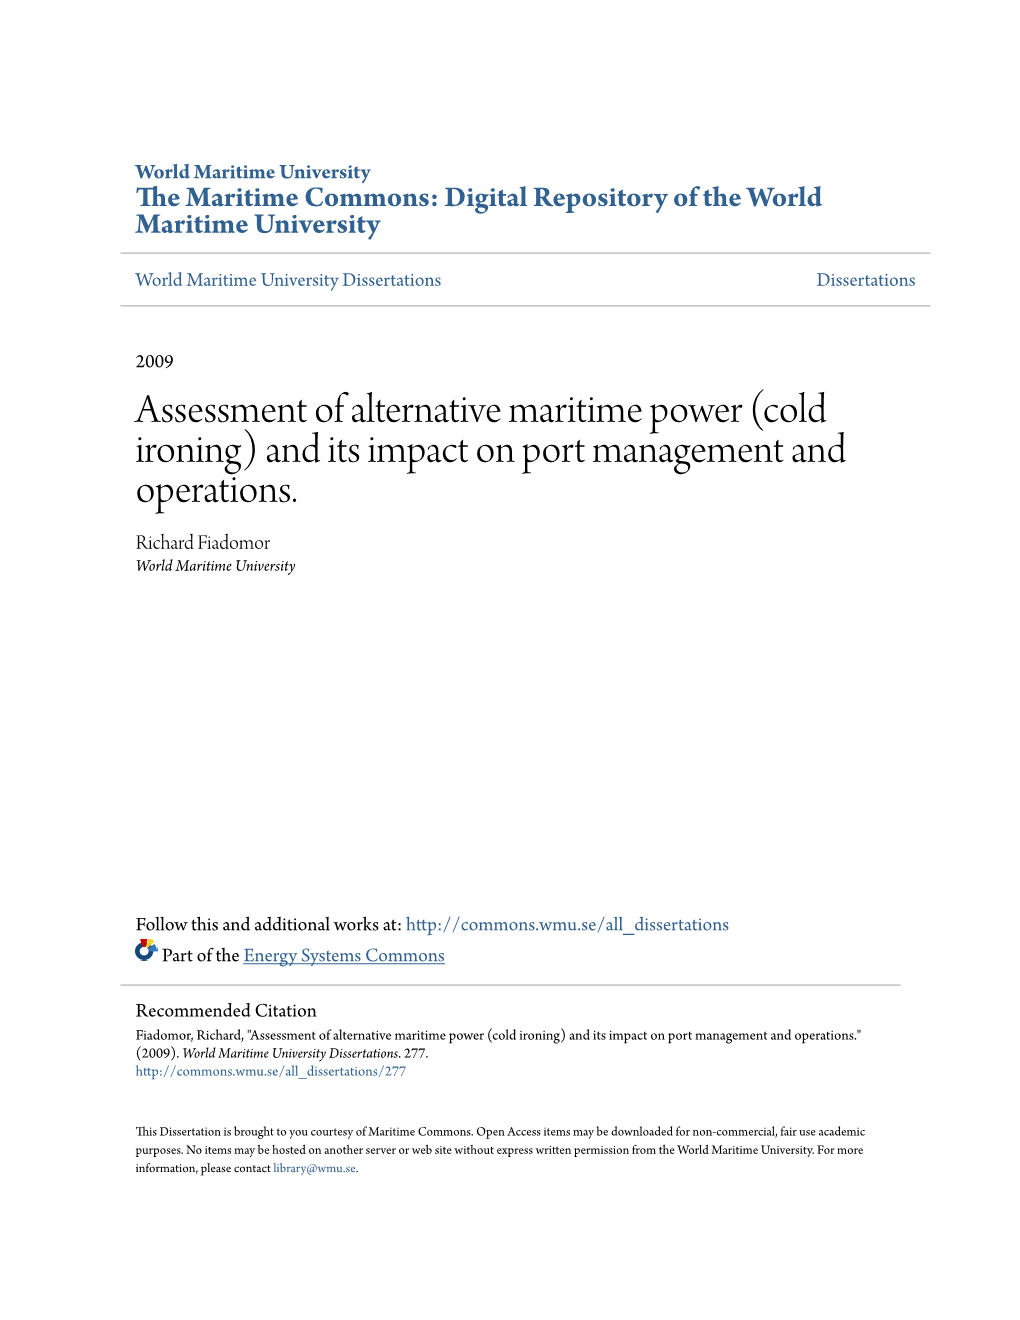 (Cold Ironing) and Its Impact on Port Management and Operations. Richard Fiadomor World Maritime University